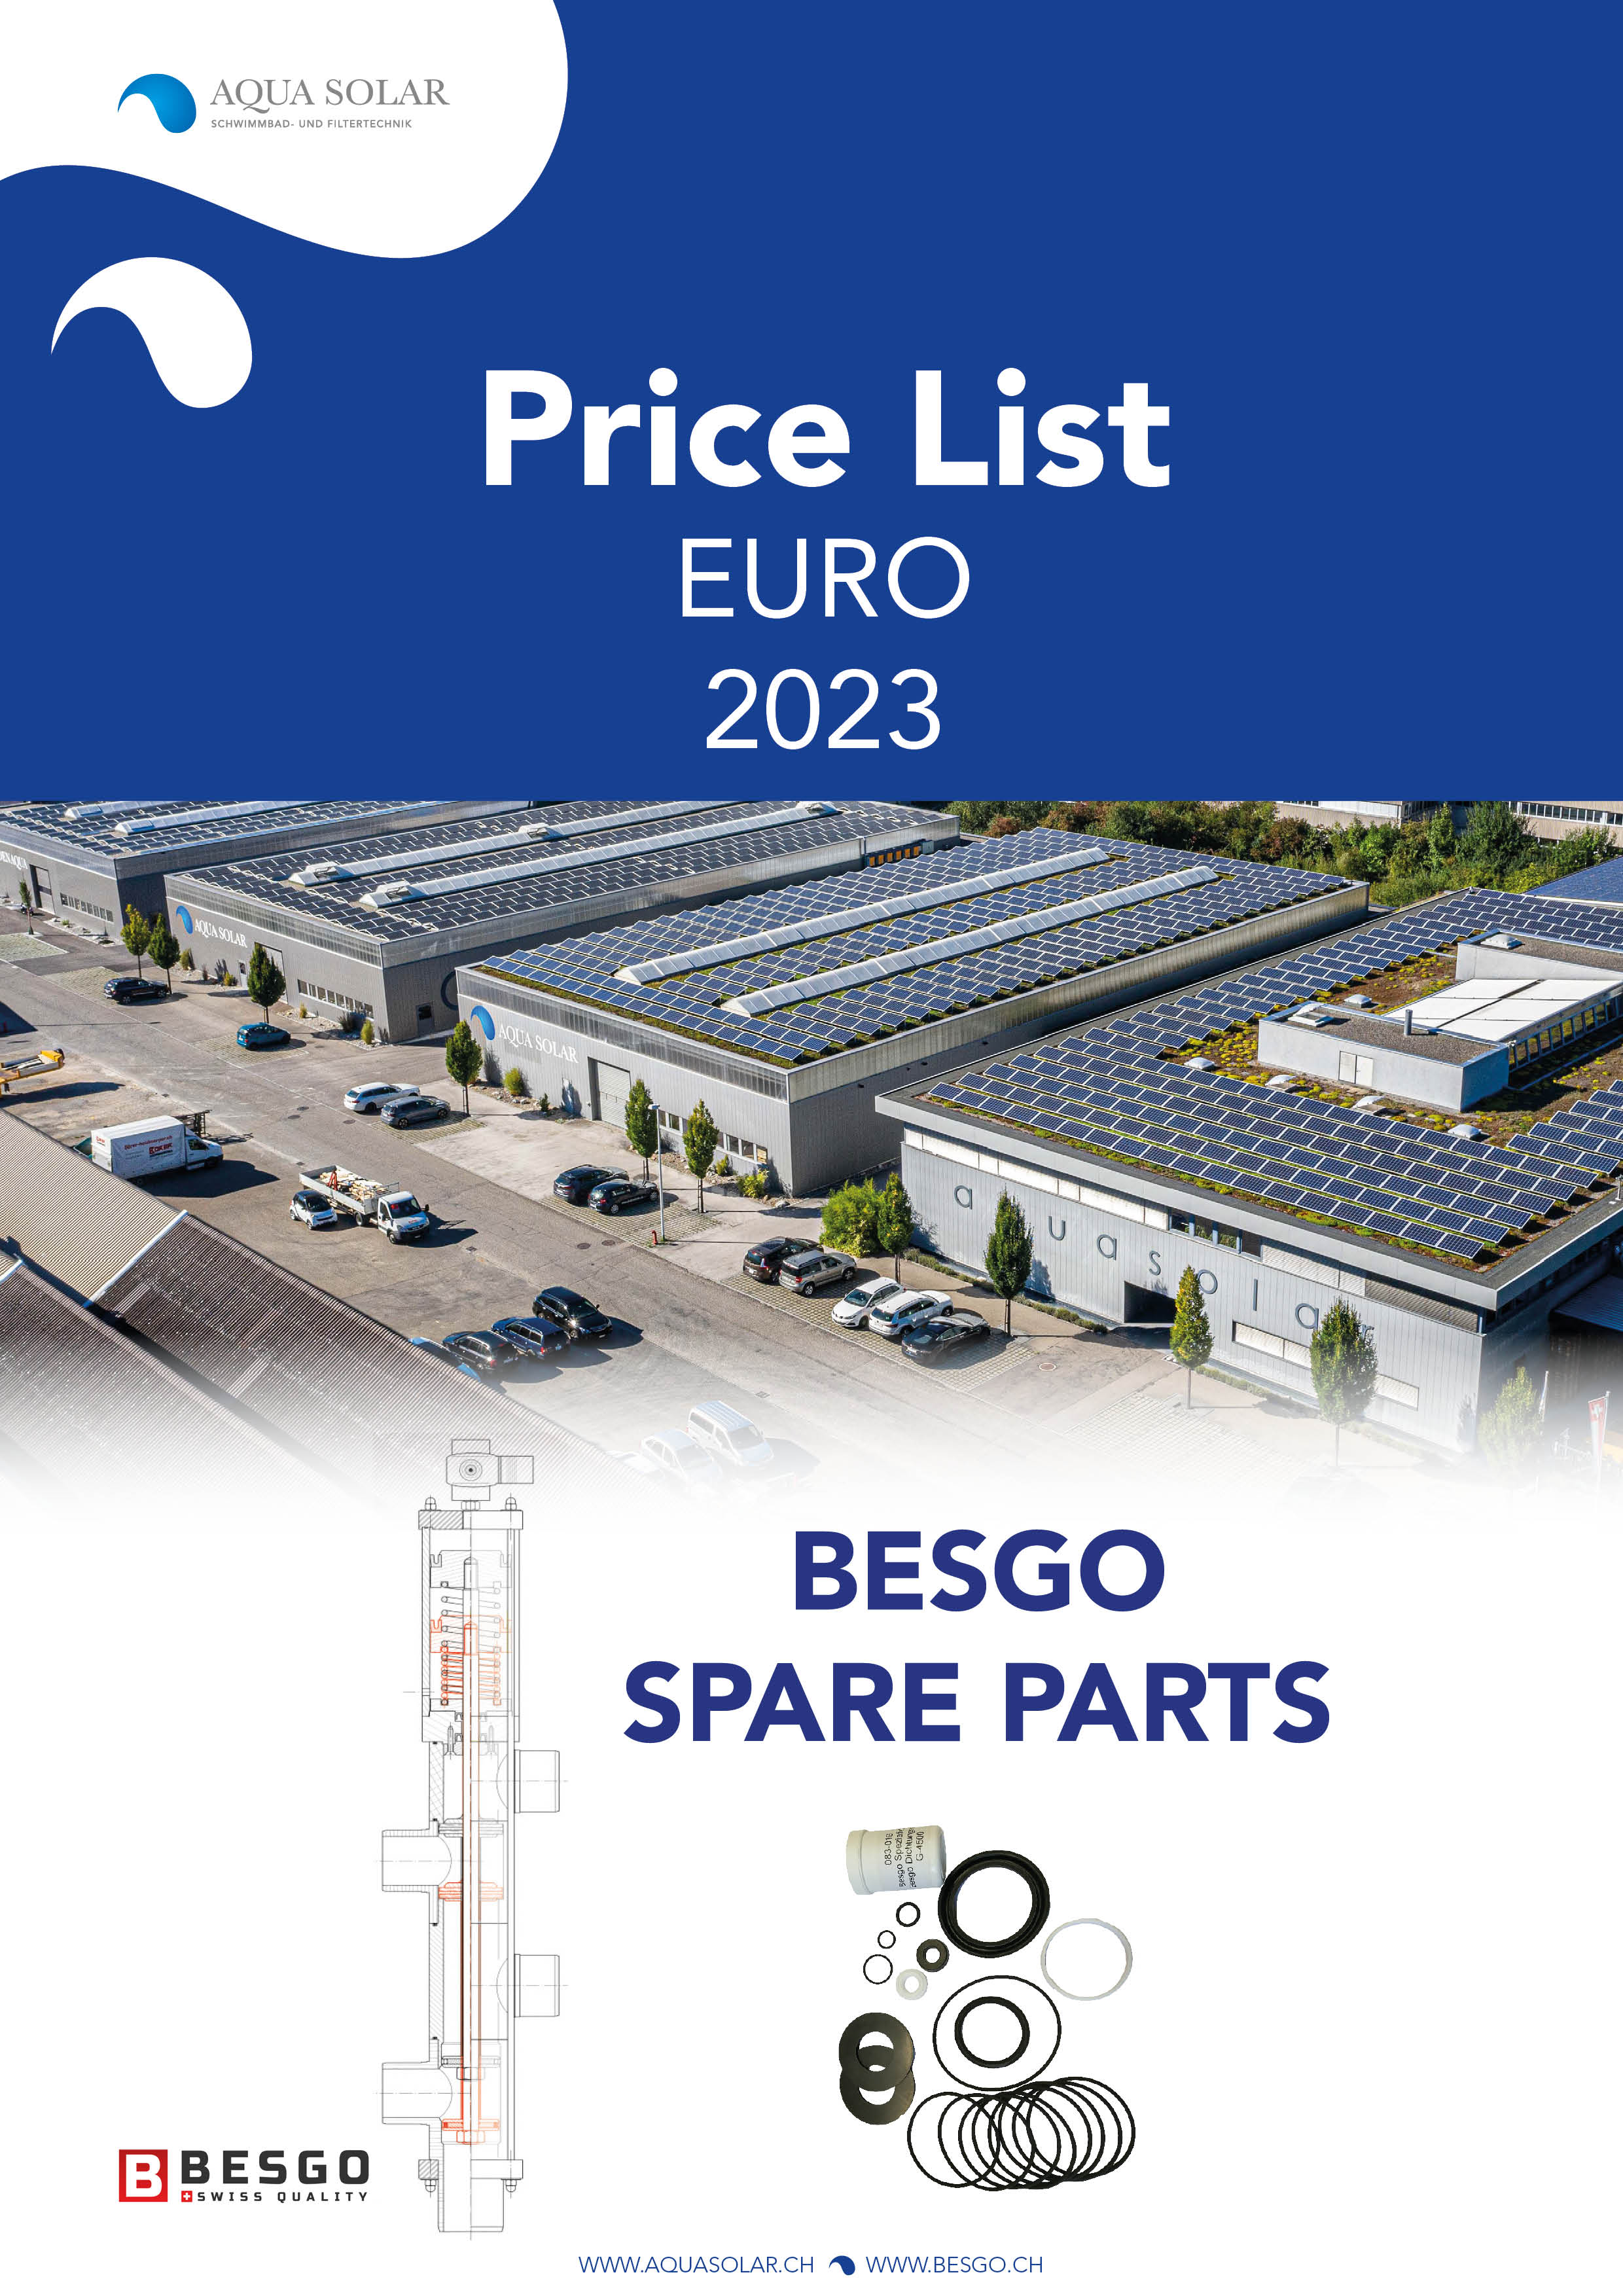 Besgo Spare Parts Price List 2023